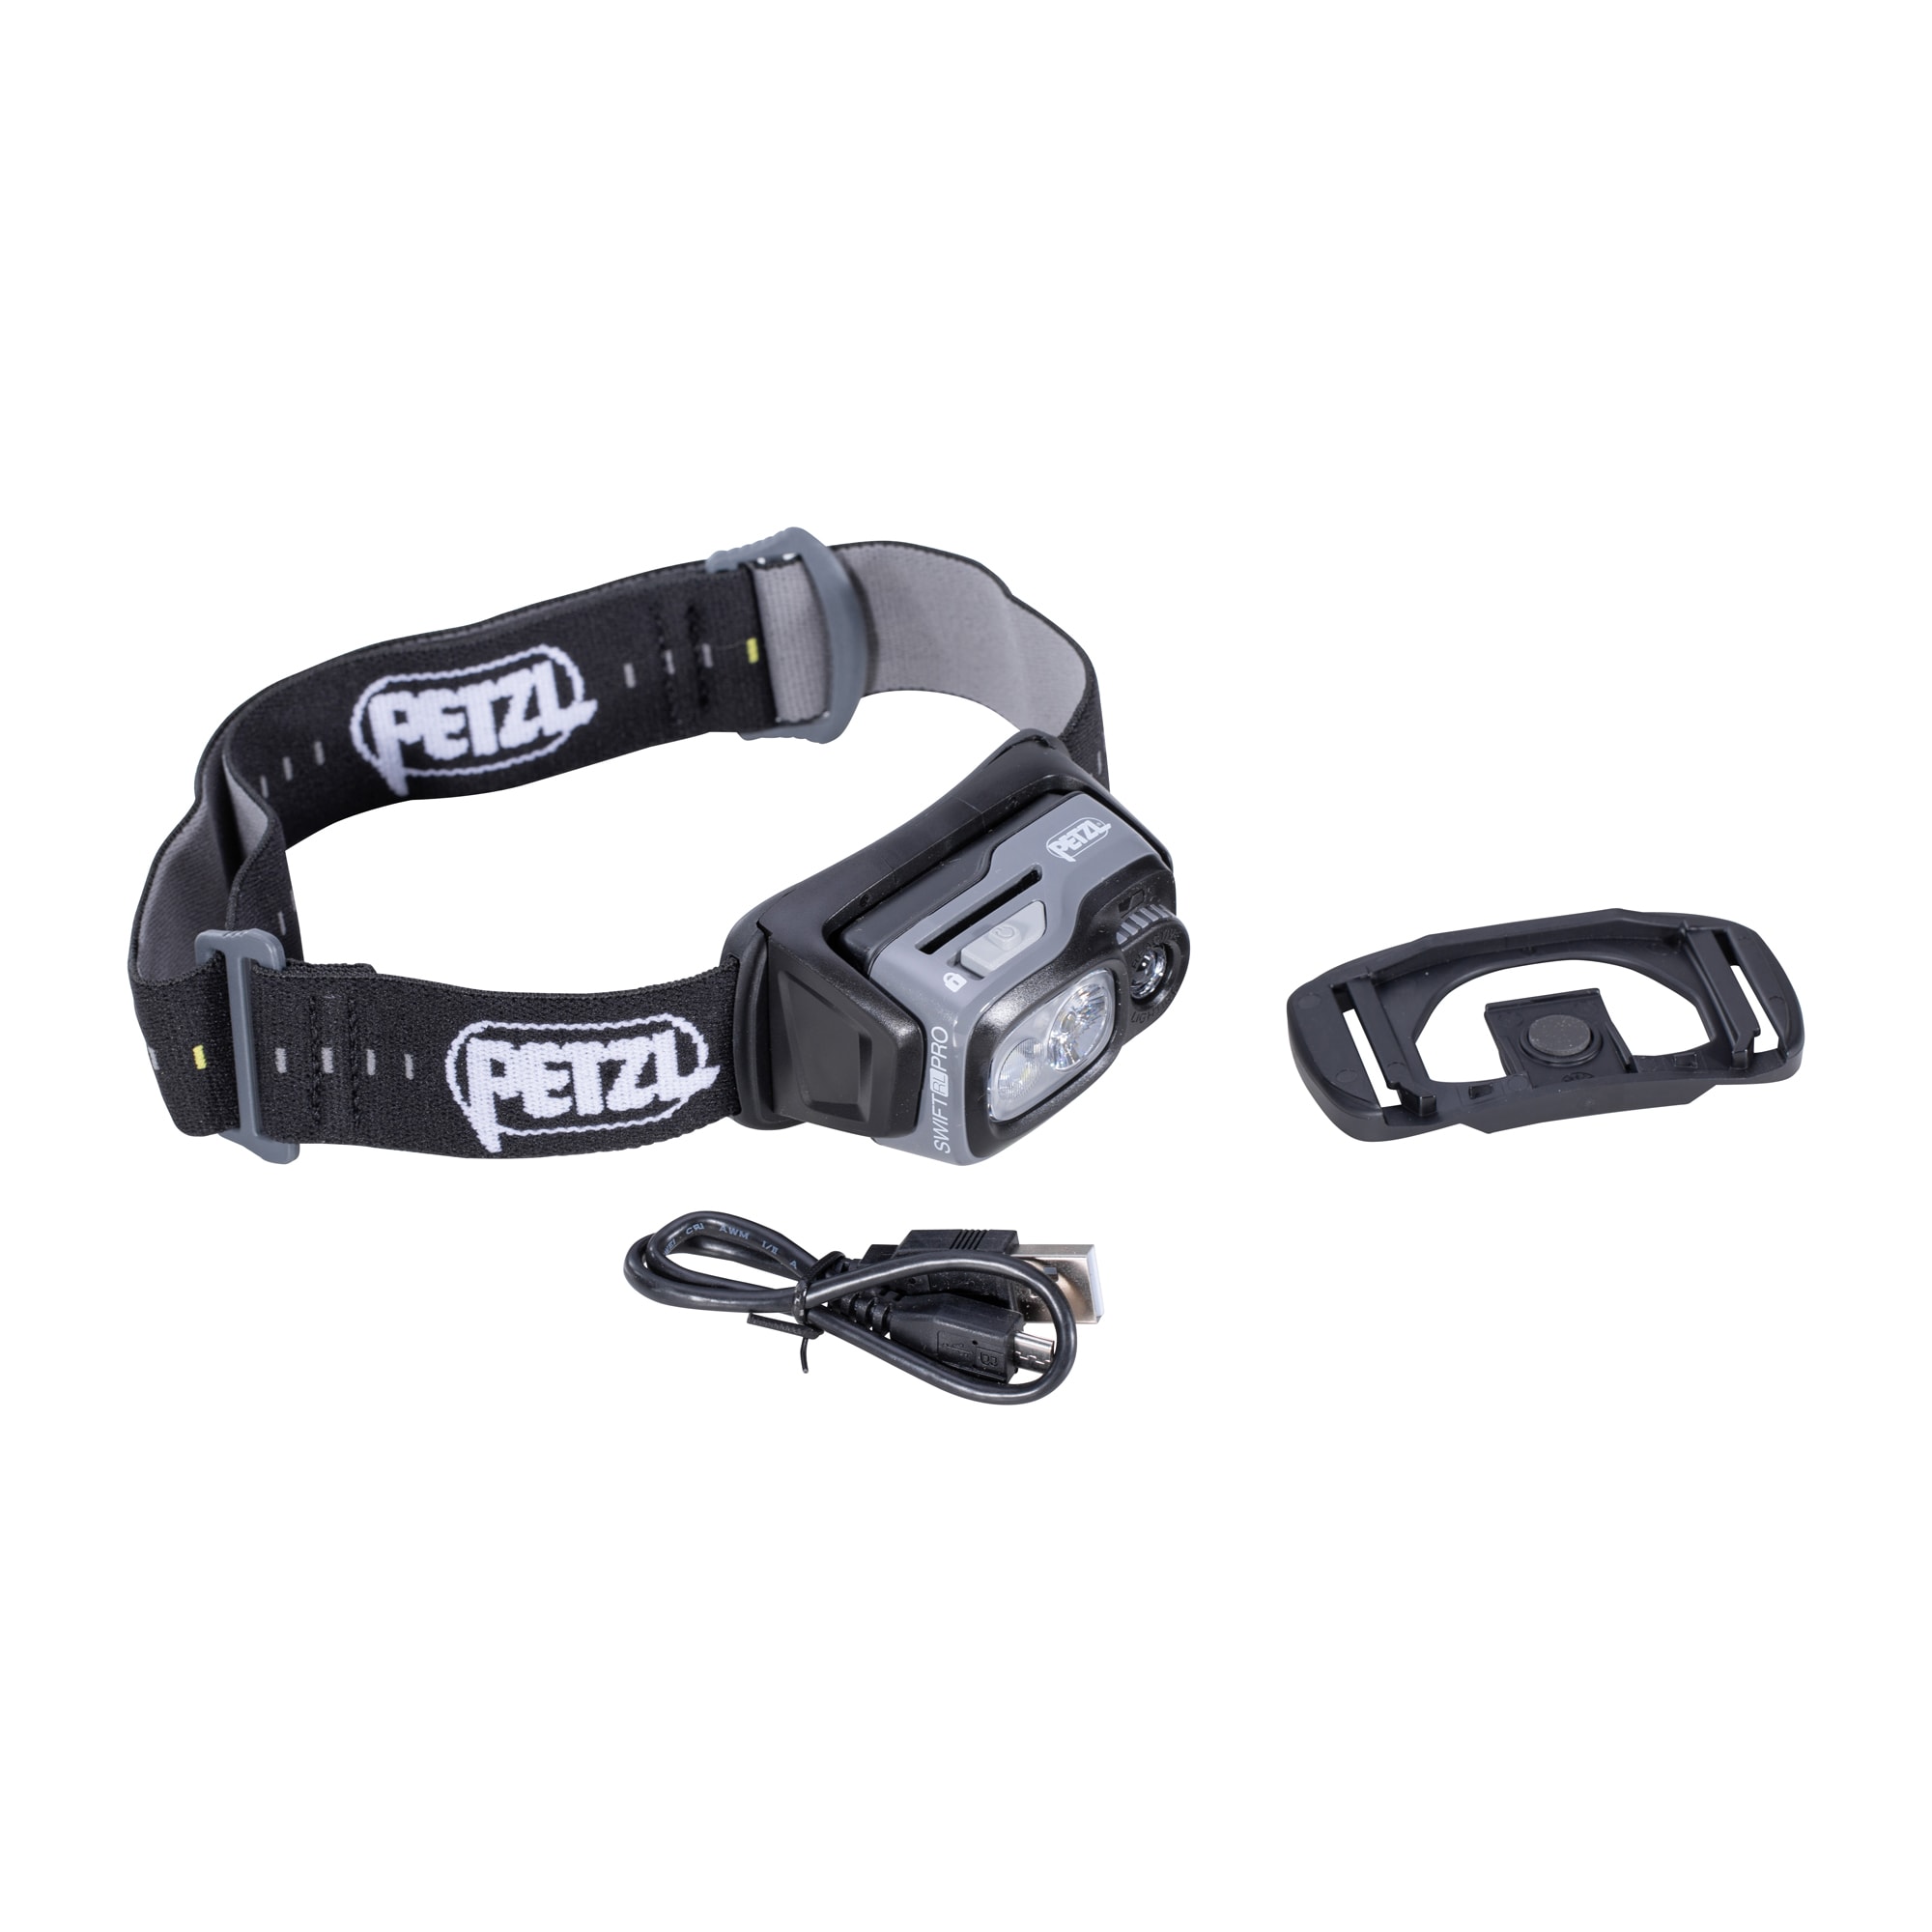 Purchase the Petzl Headlamp Swift RL Pro black by ASMC